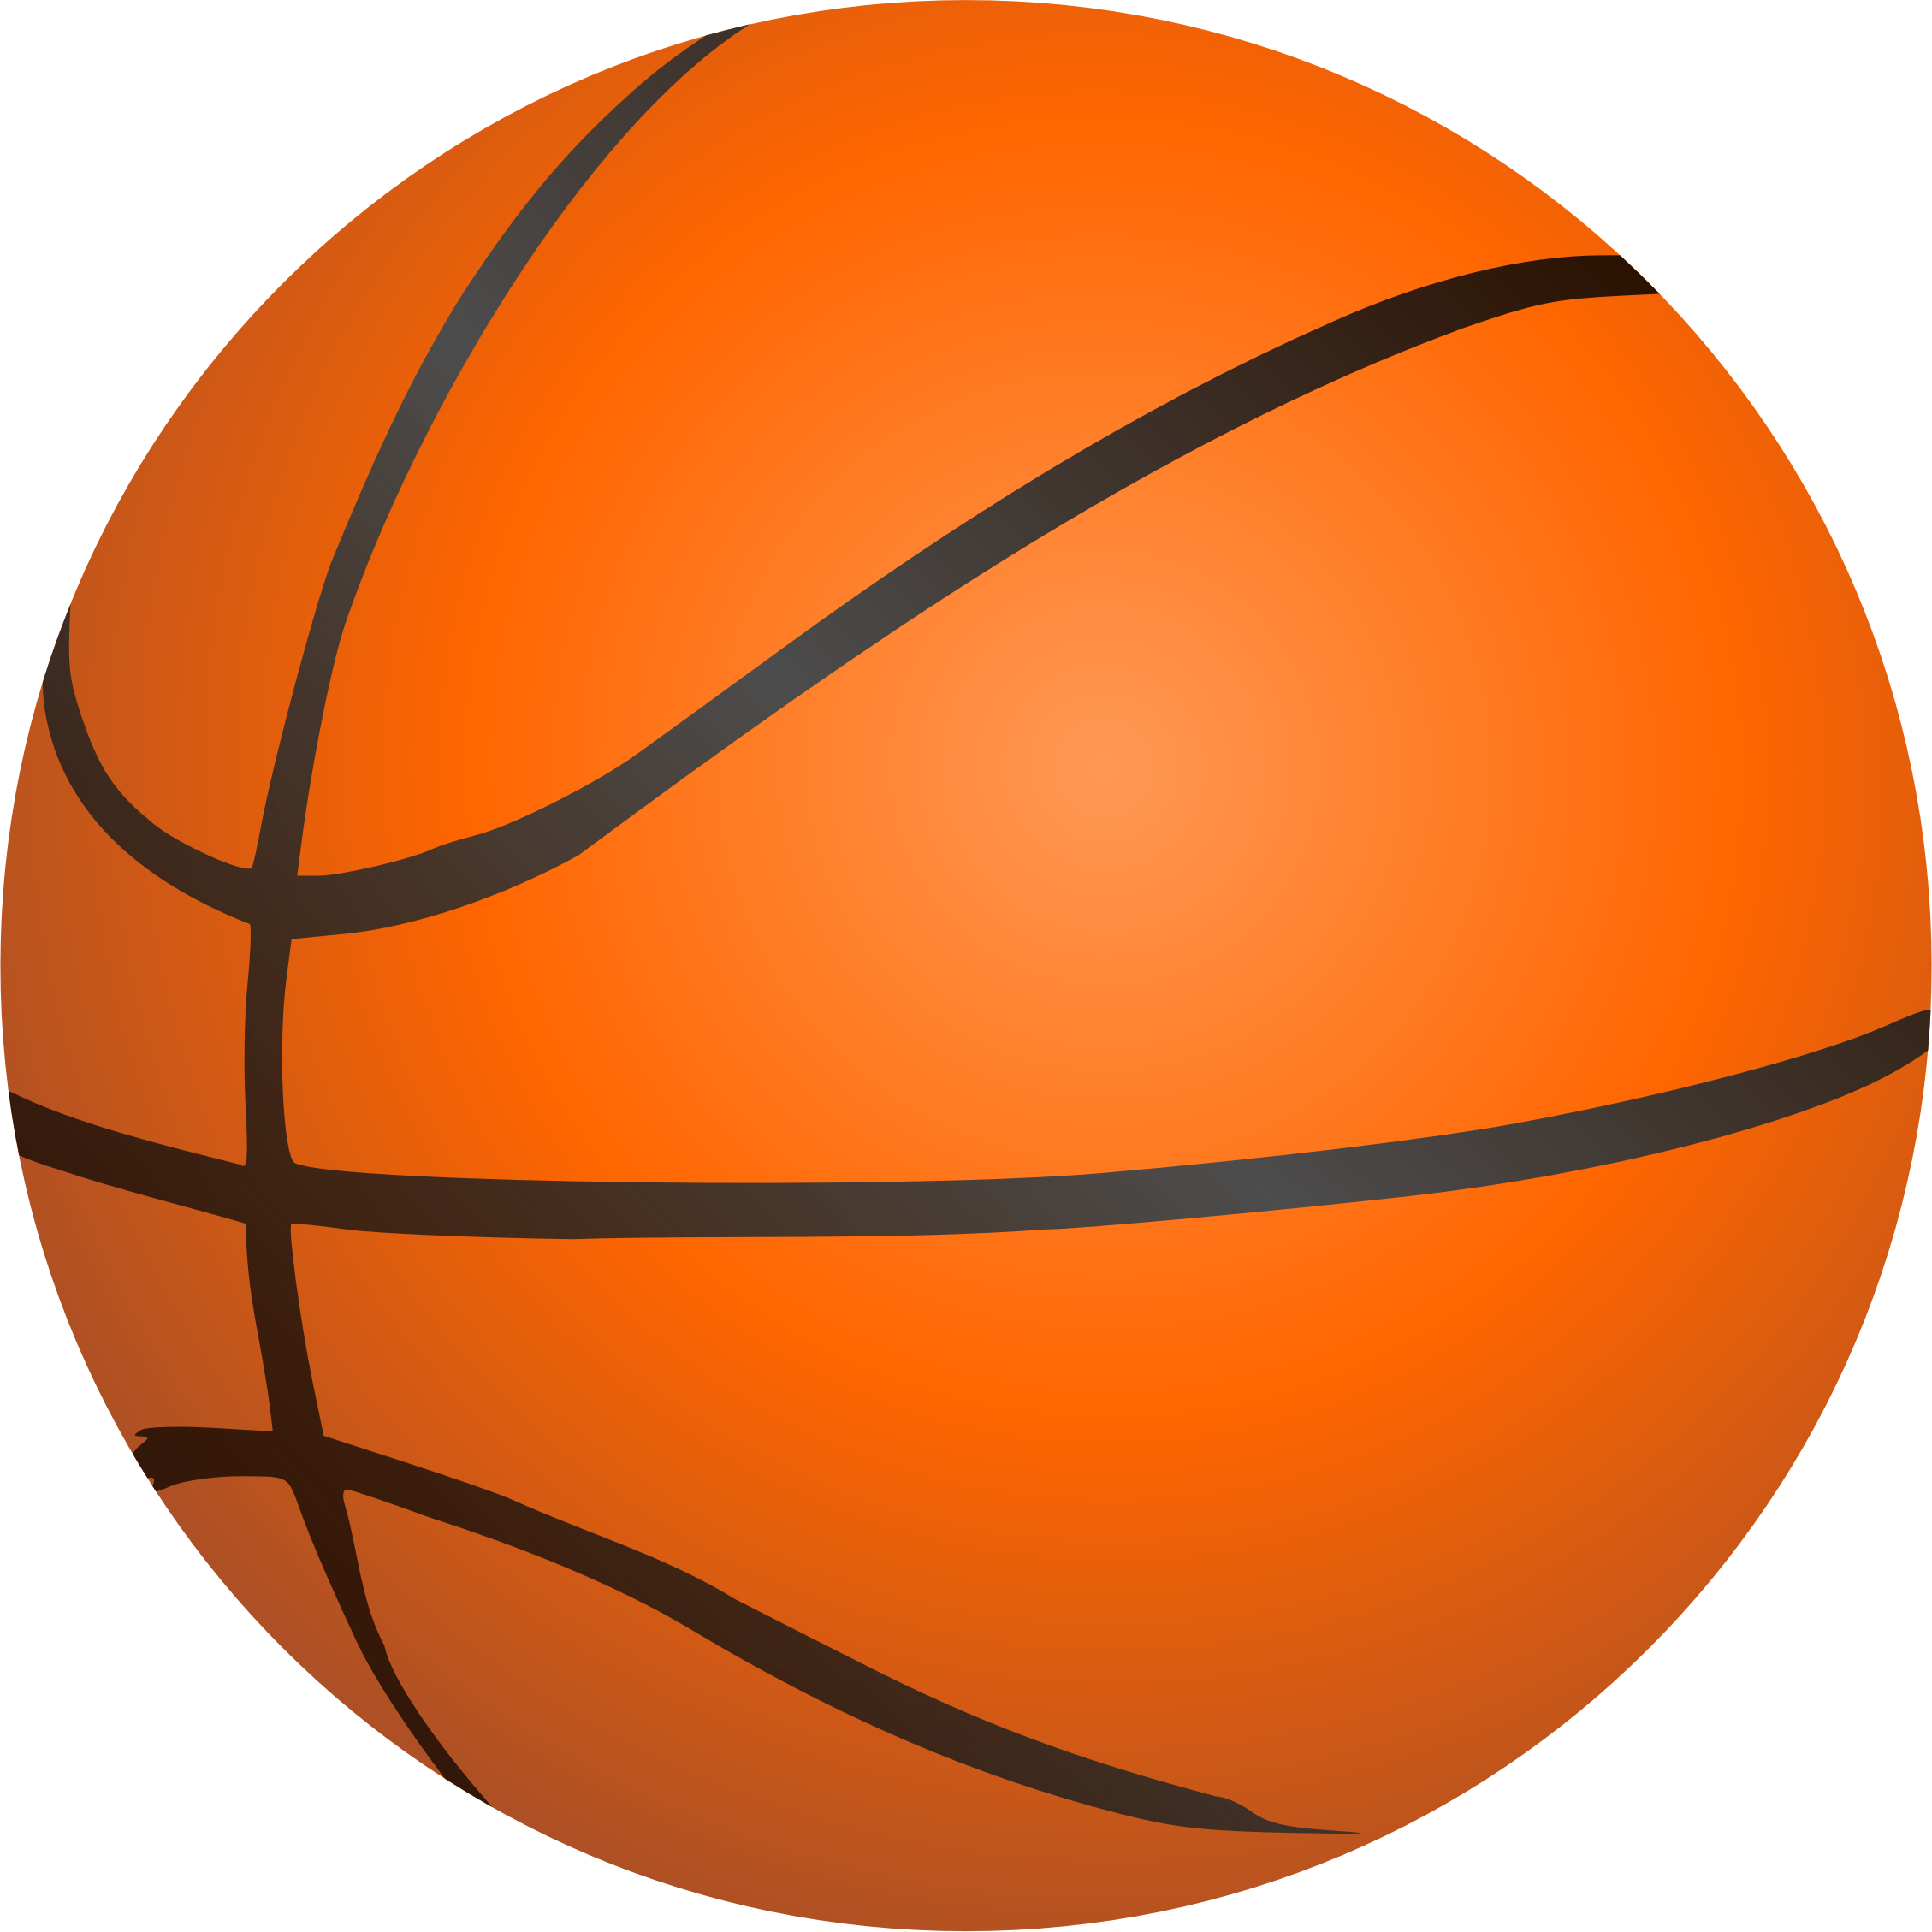 oranges clipart basketball